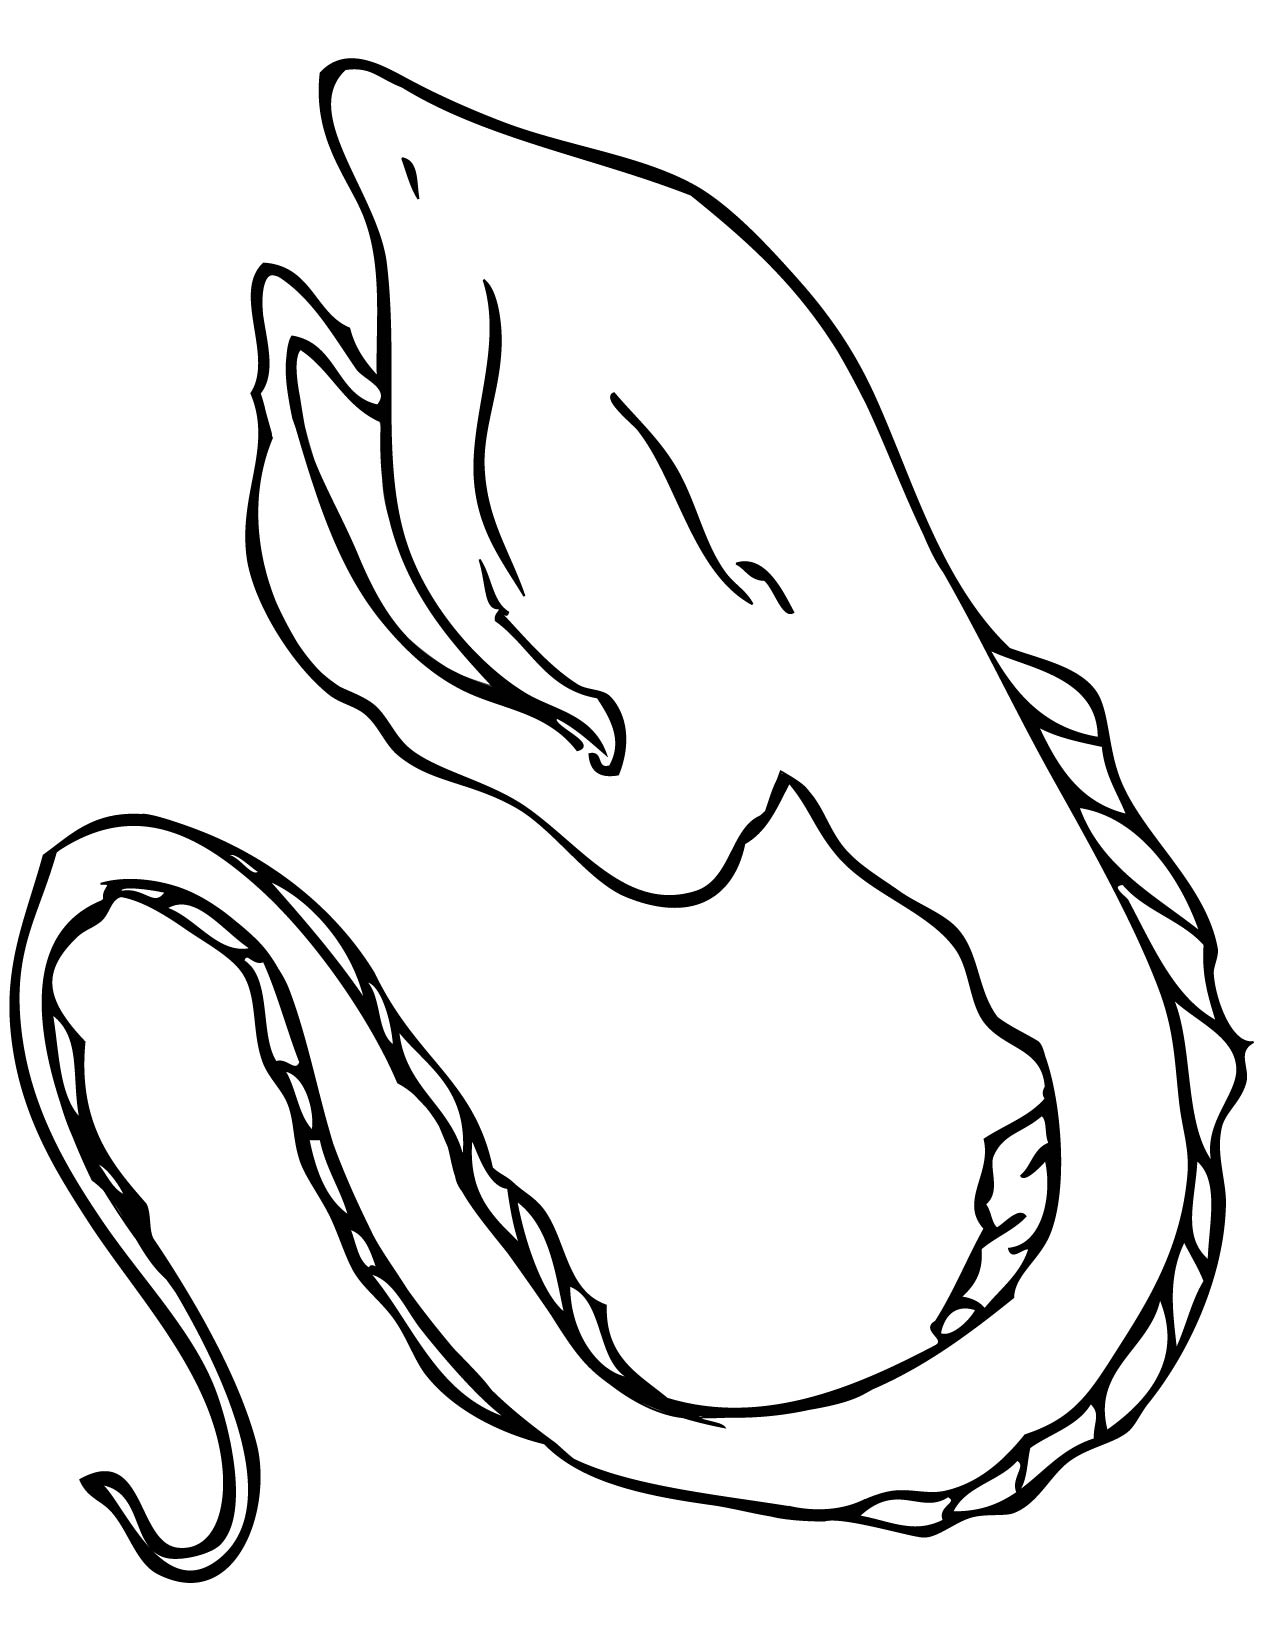 Eel coloring #3, Download drawings